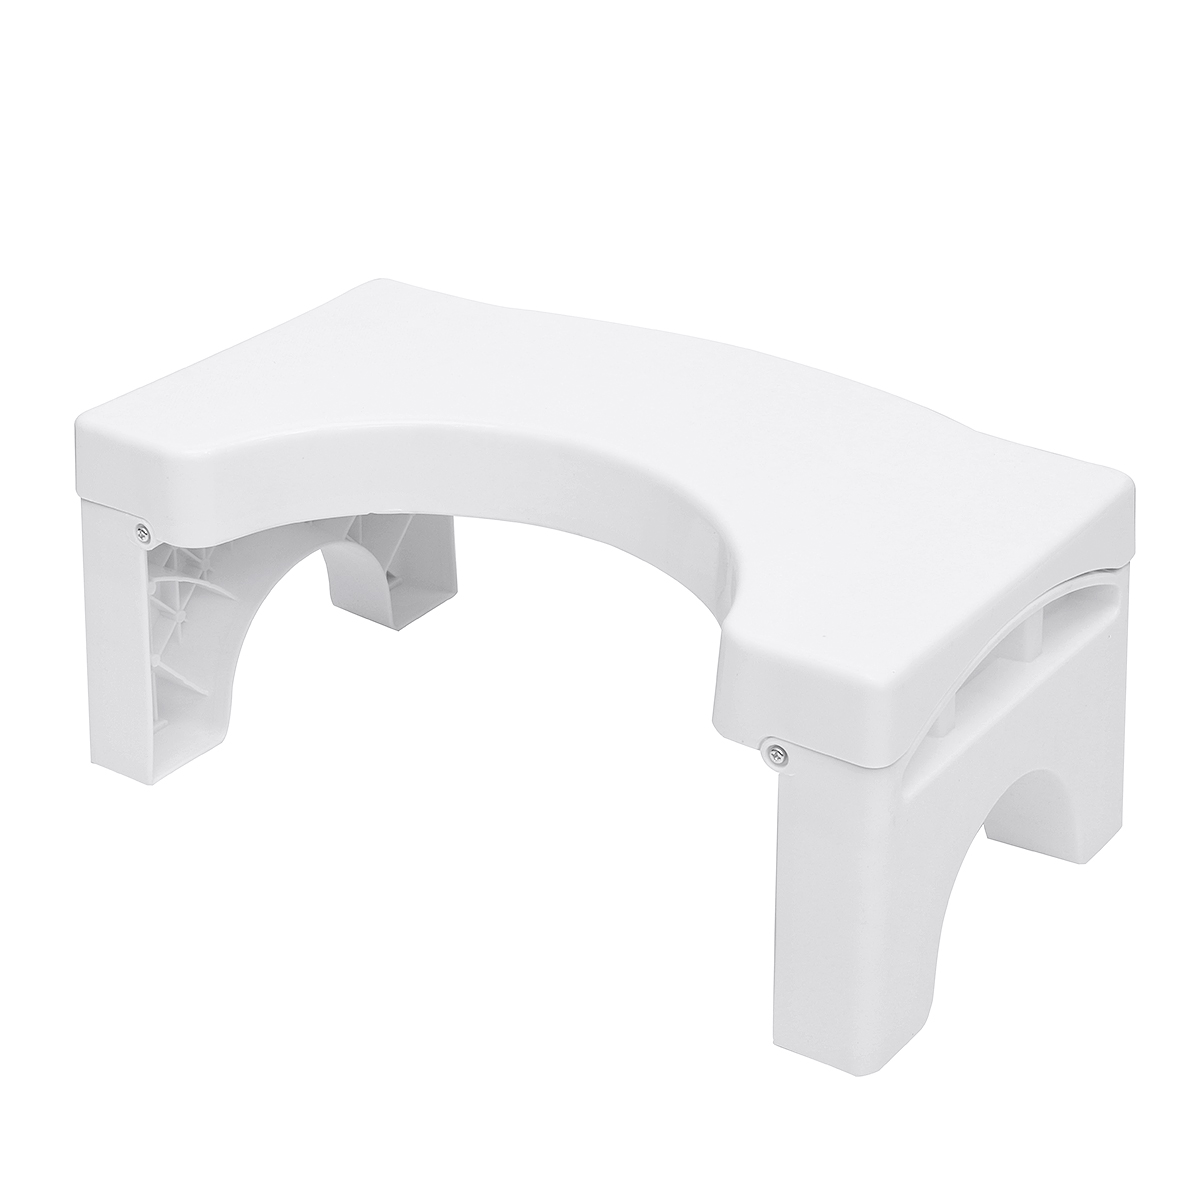 Foldable-Toilet-Stool-Potty-Chair-Plastic-Non-slip-Bathroom-White-Sit-Footstool-Decorations-1516575